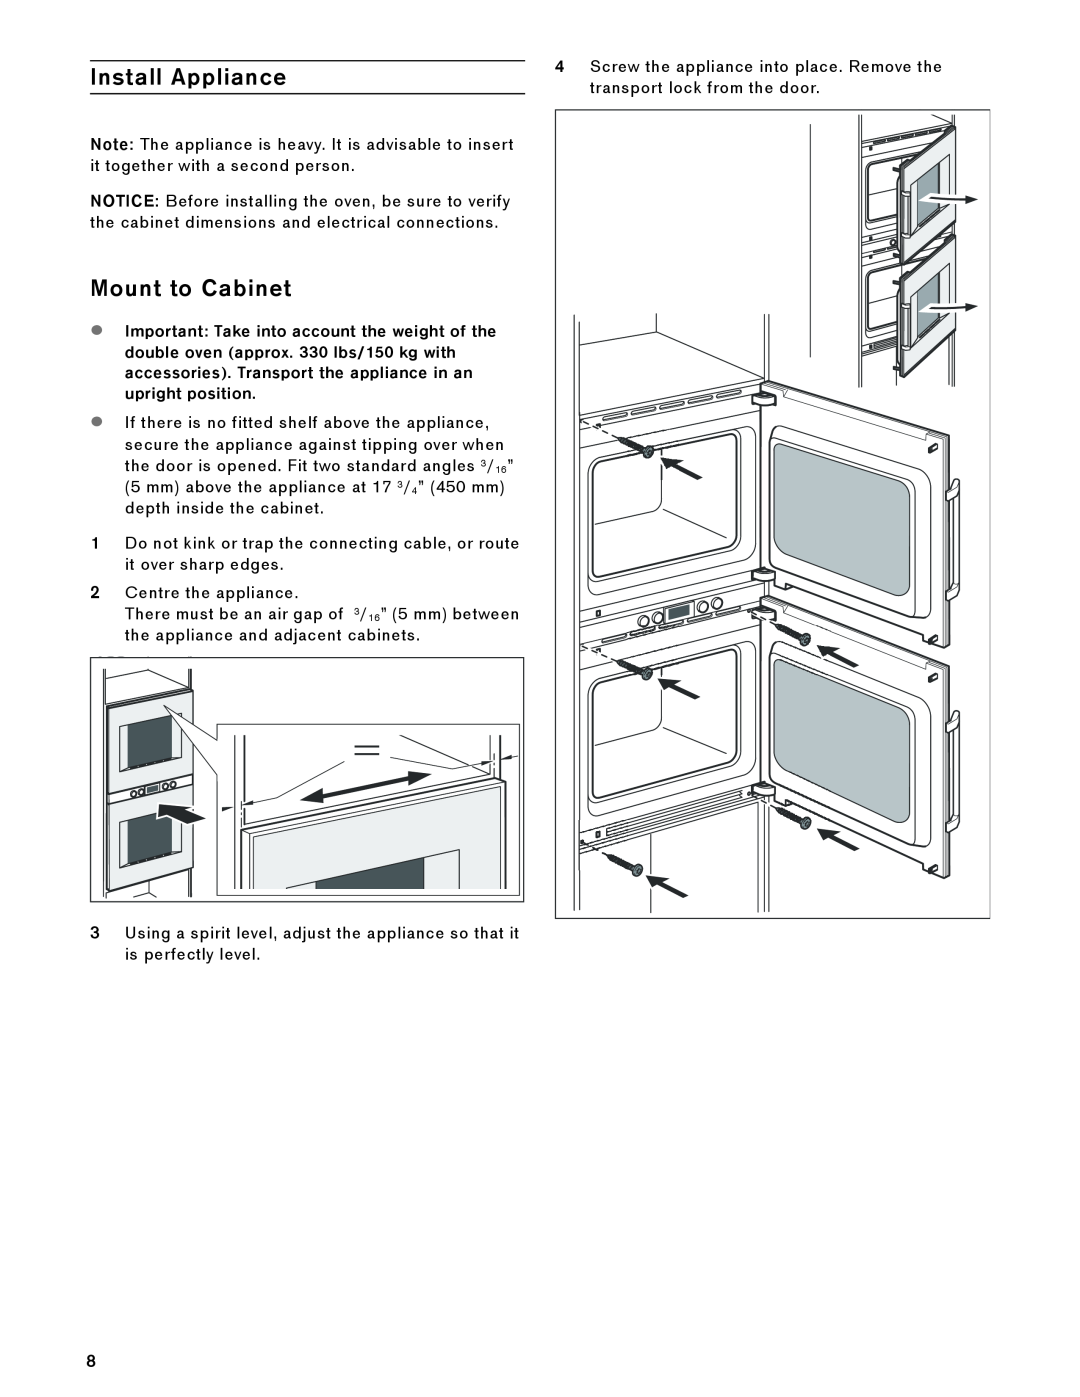 Gaggenau BX 481 610, BX 480 610 manual Install Appliance, Mount to Cabinet 